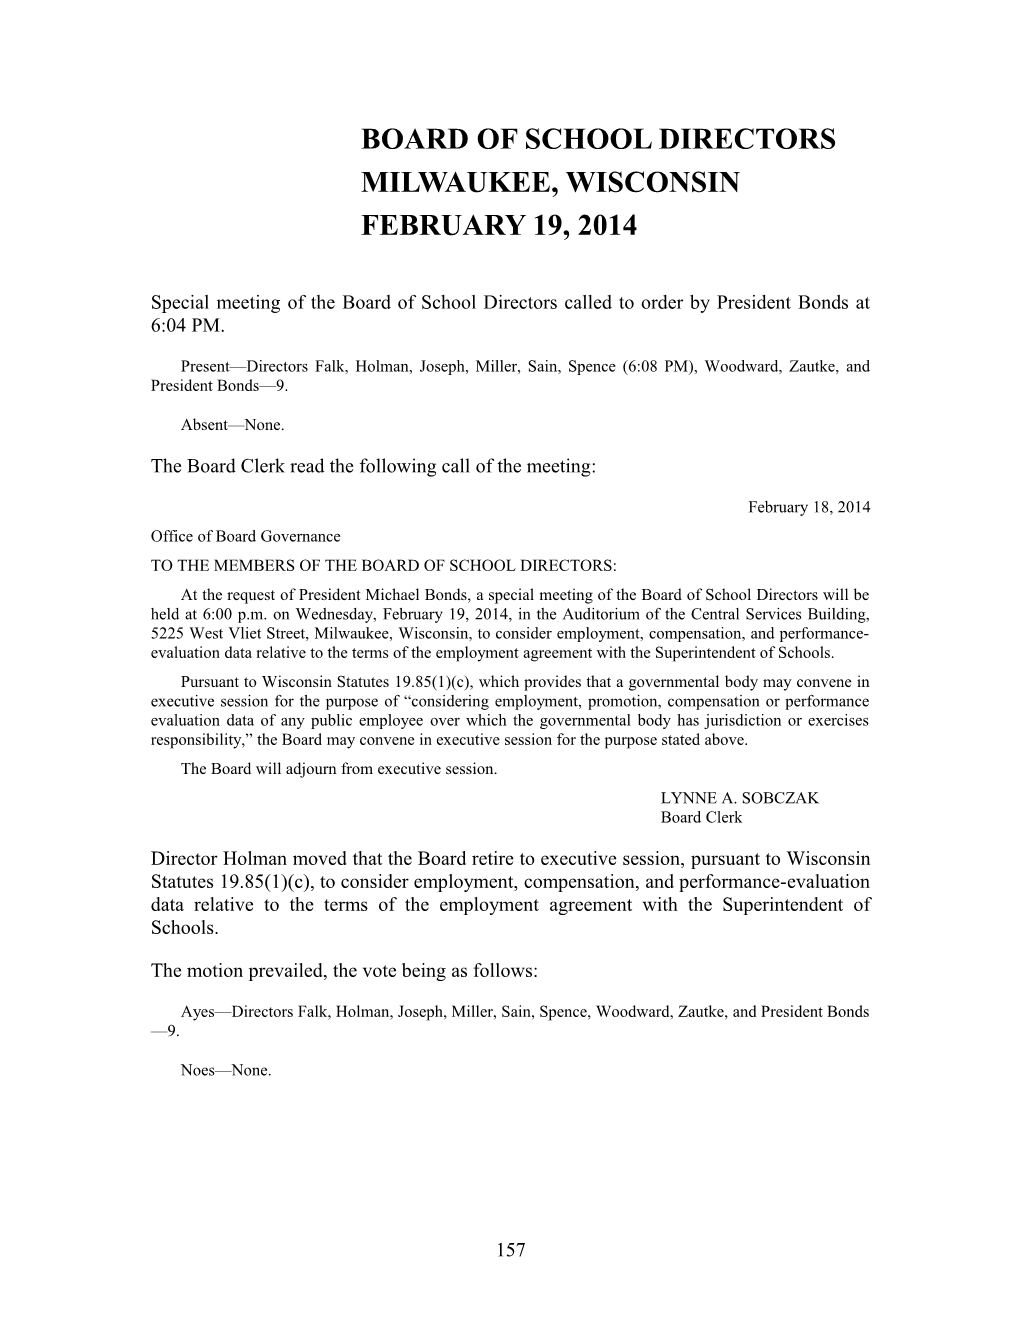 February 2014 Proceedings of the Milwaukee Board of School Directors